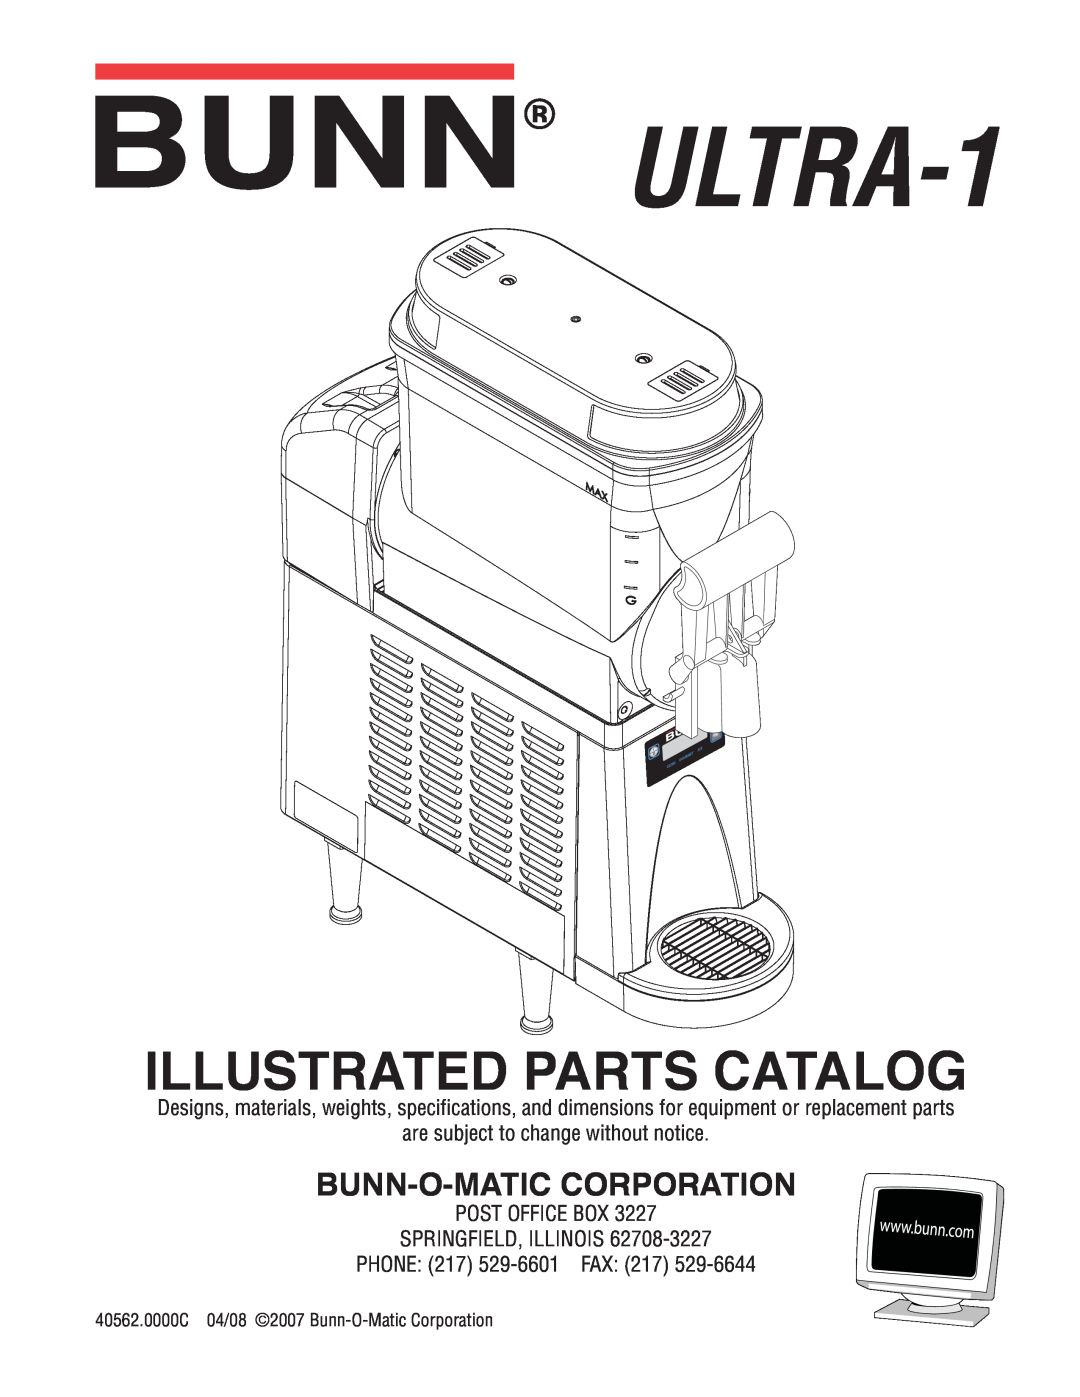 Bunn manual ULTRA-1 ULTRA-2, Programming Manual, Bunn-O-Matic Corporation 